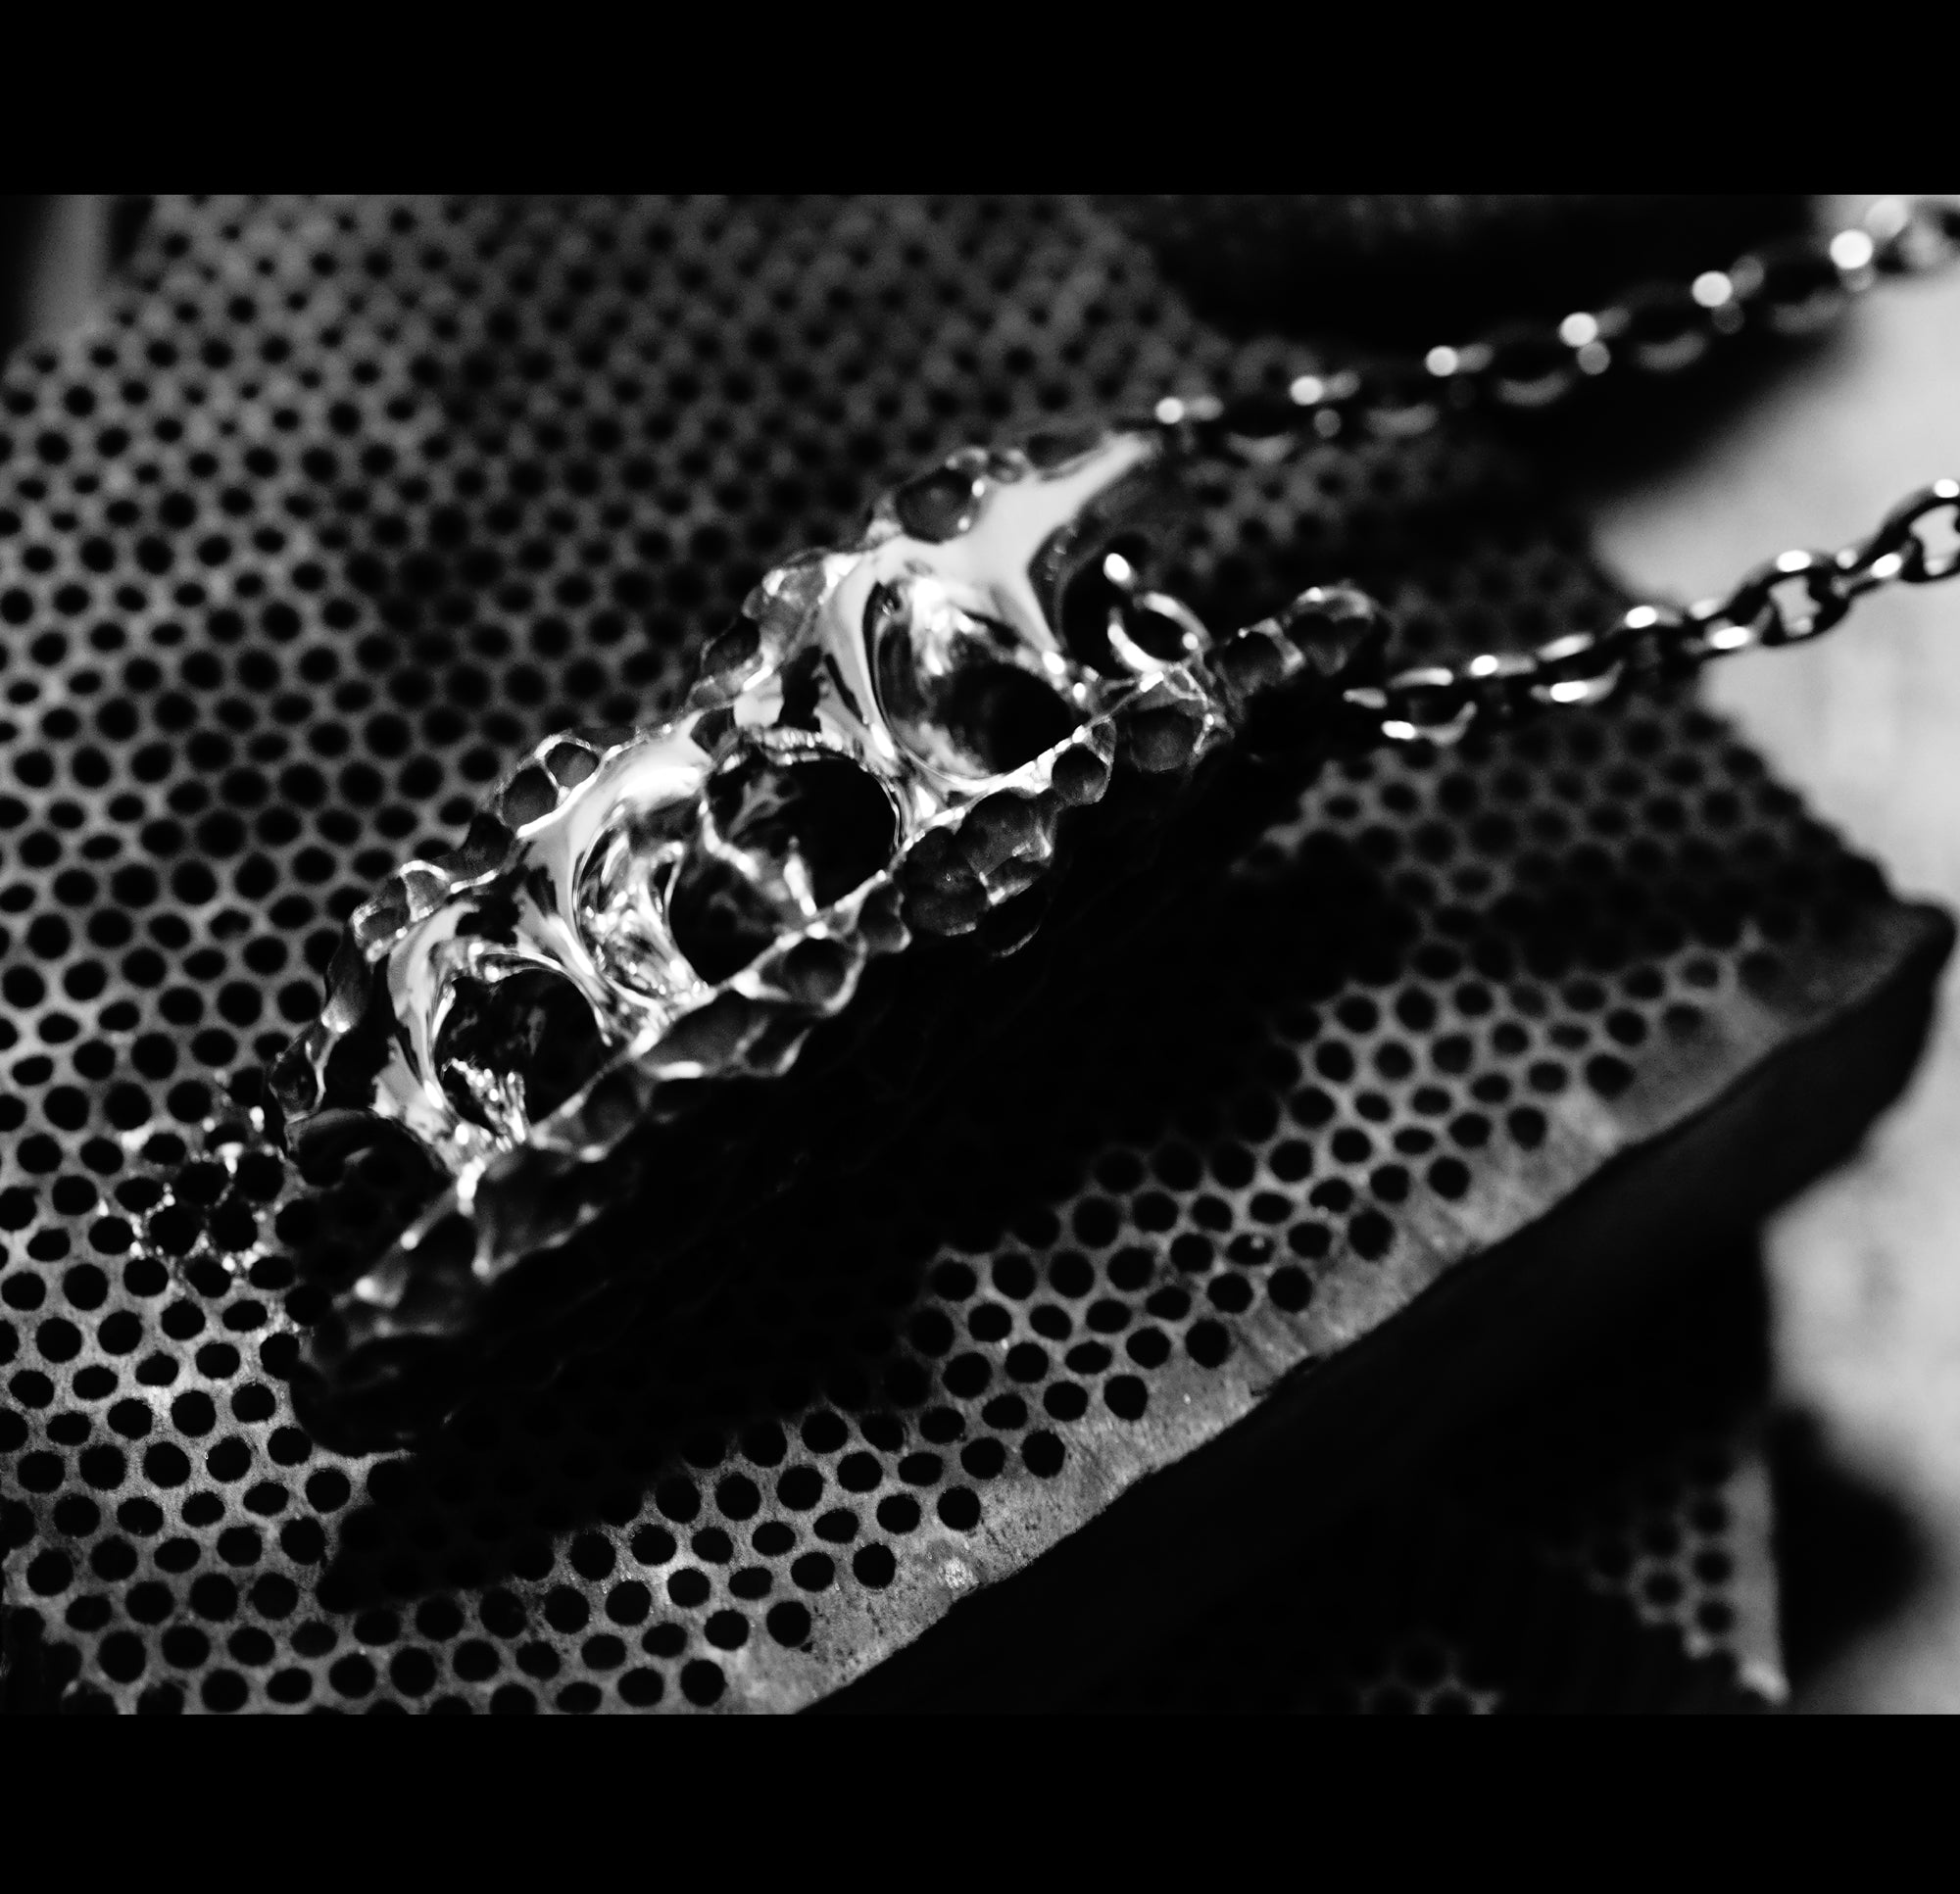 Eternal - Silver necklace with original clasp - Avant Gardist